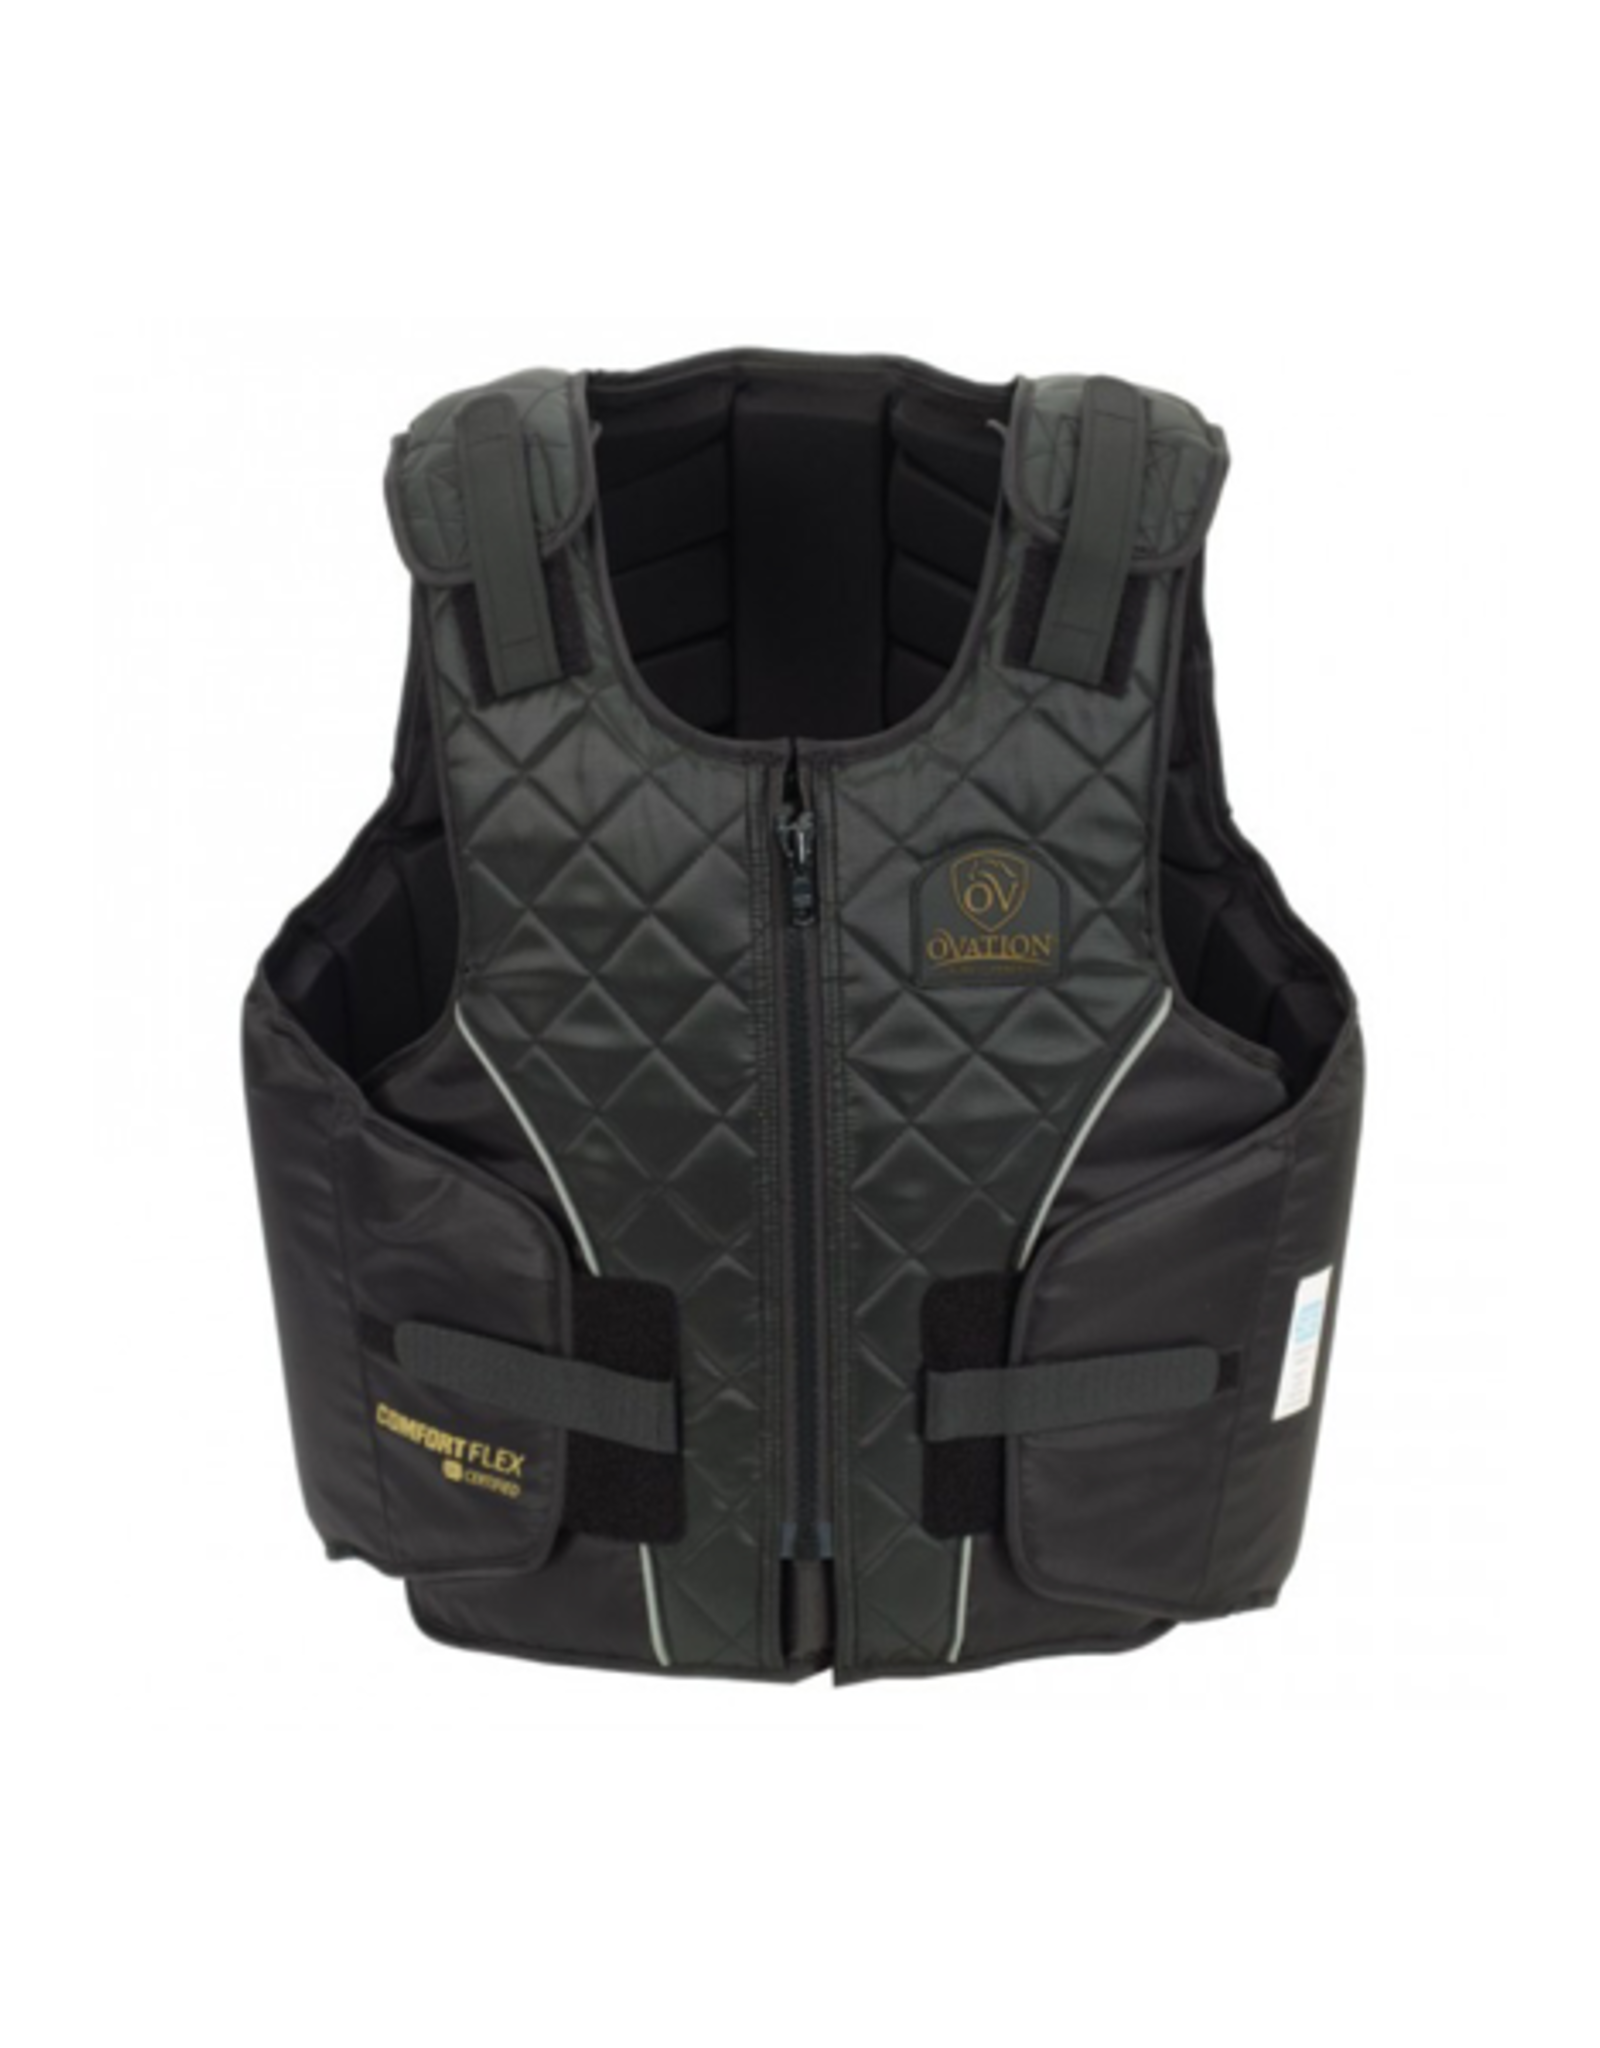 Ovation Childs' Comfortflex Protective Vest